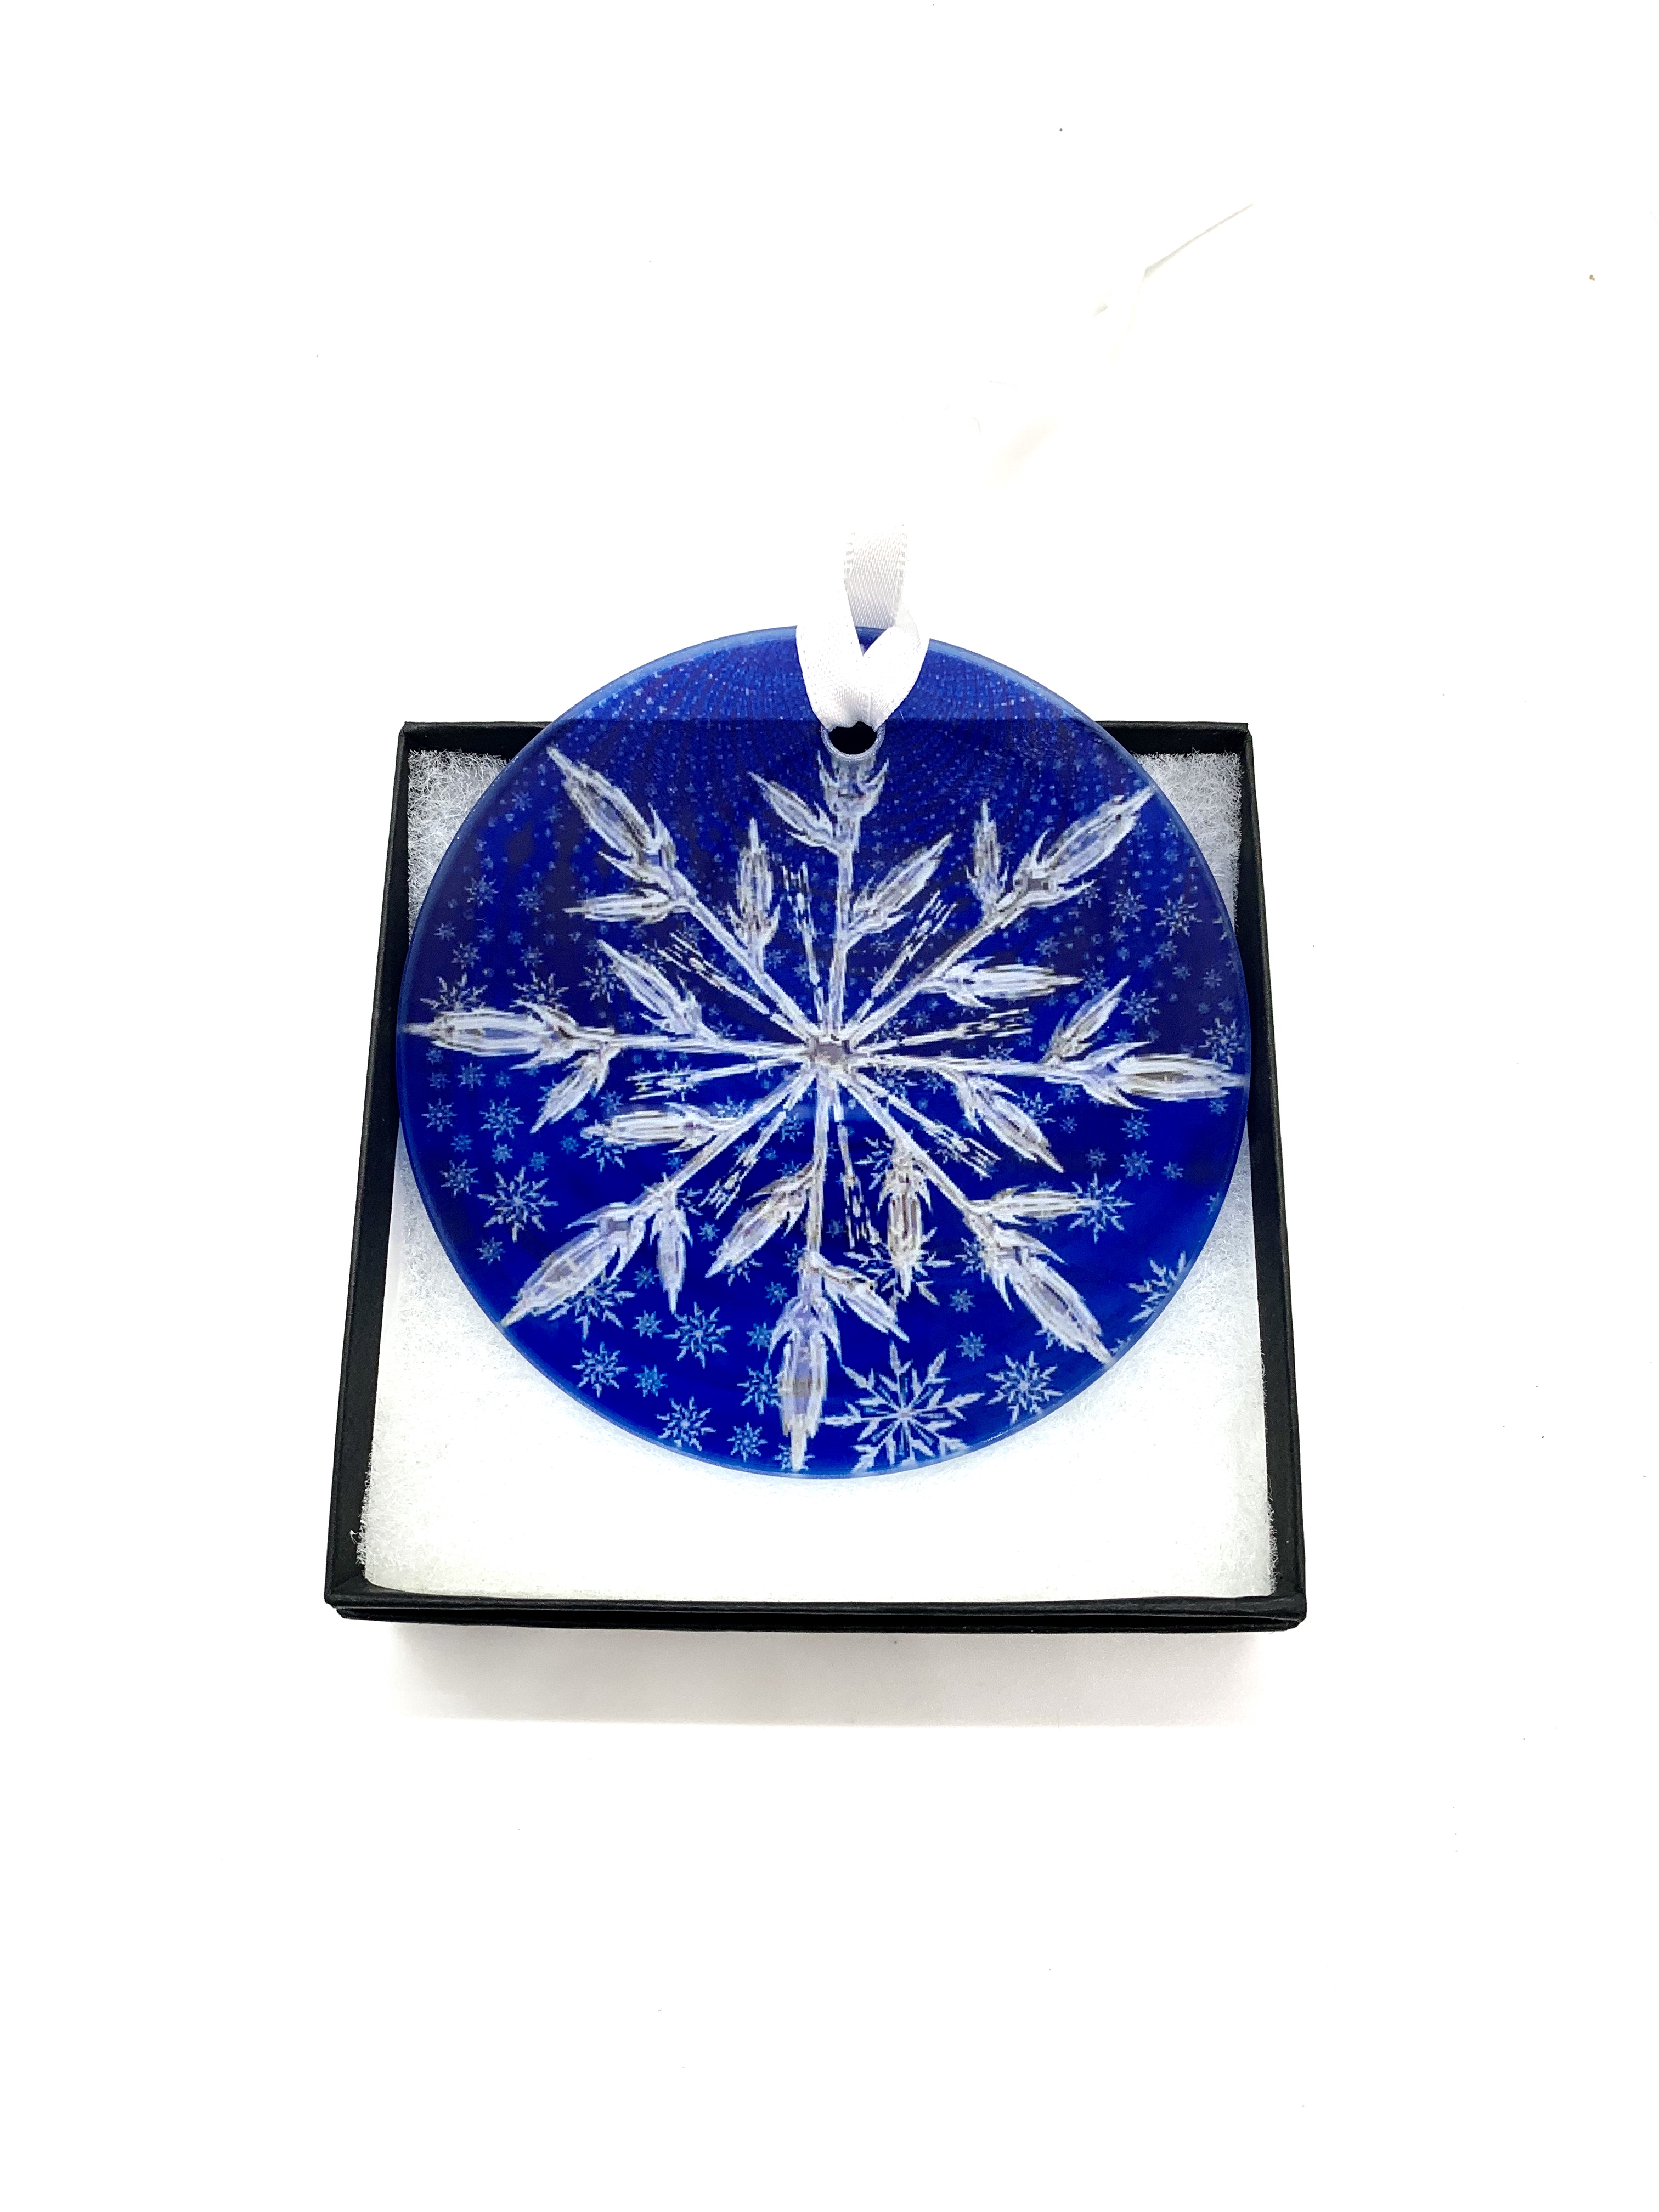 Snowflake on glass ornament